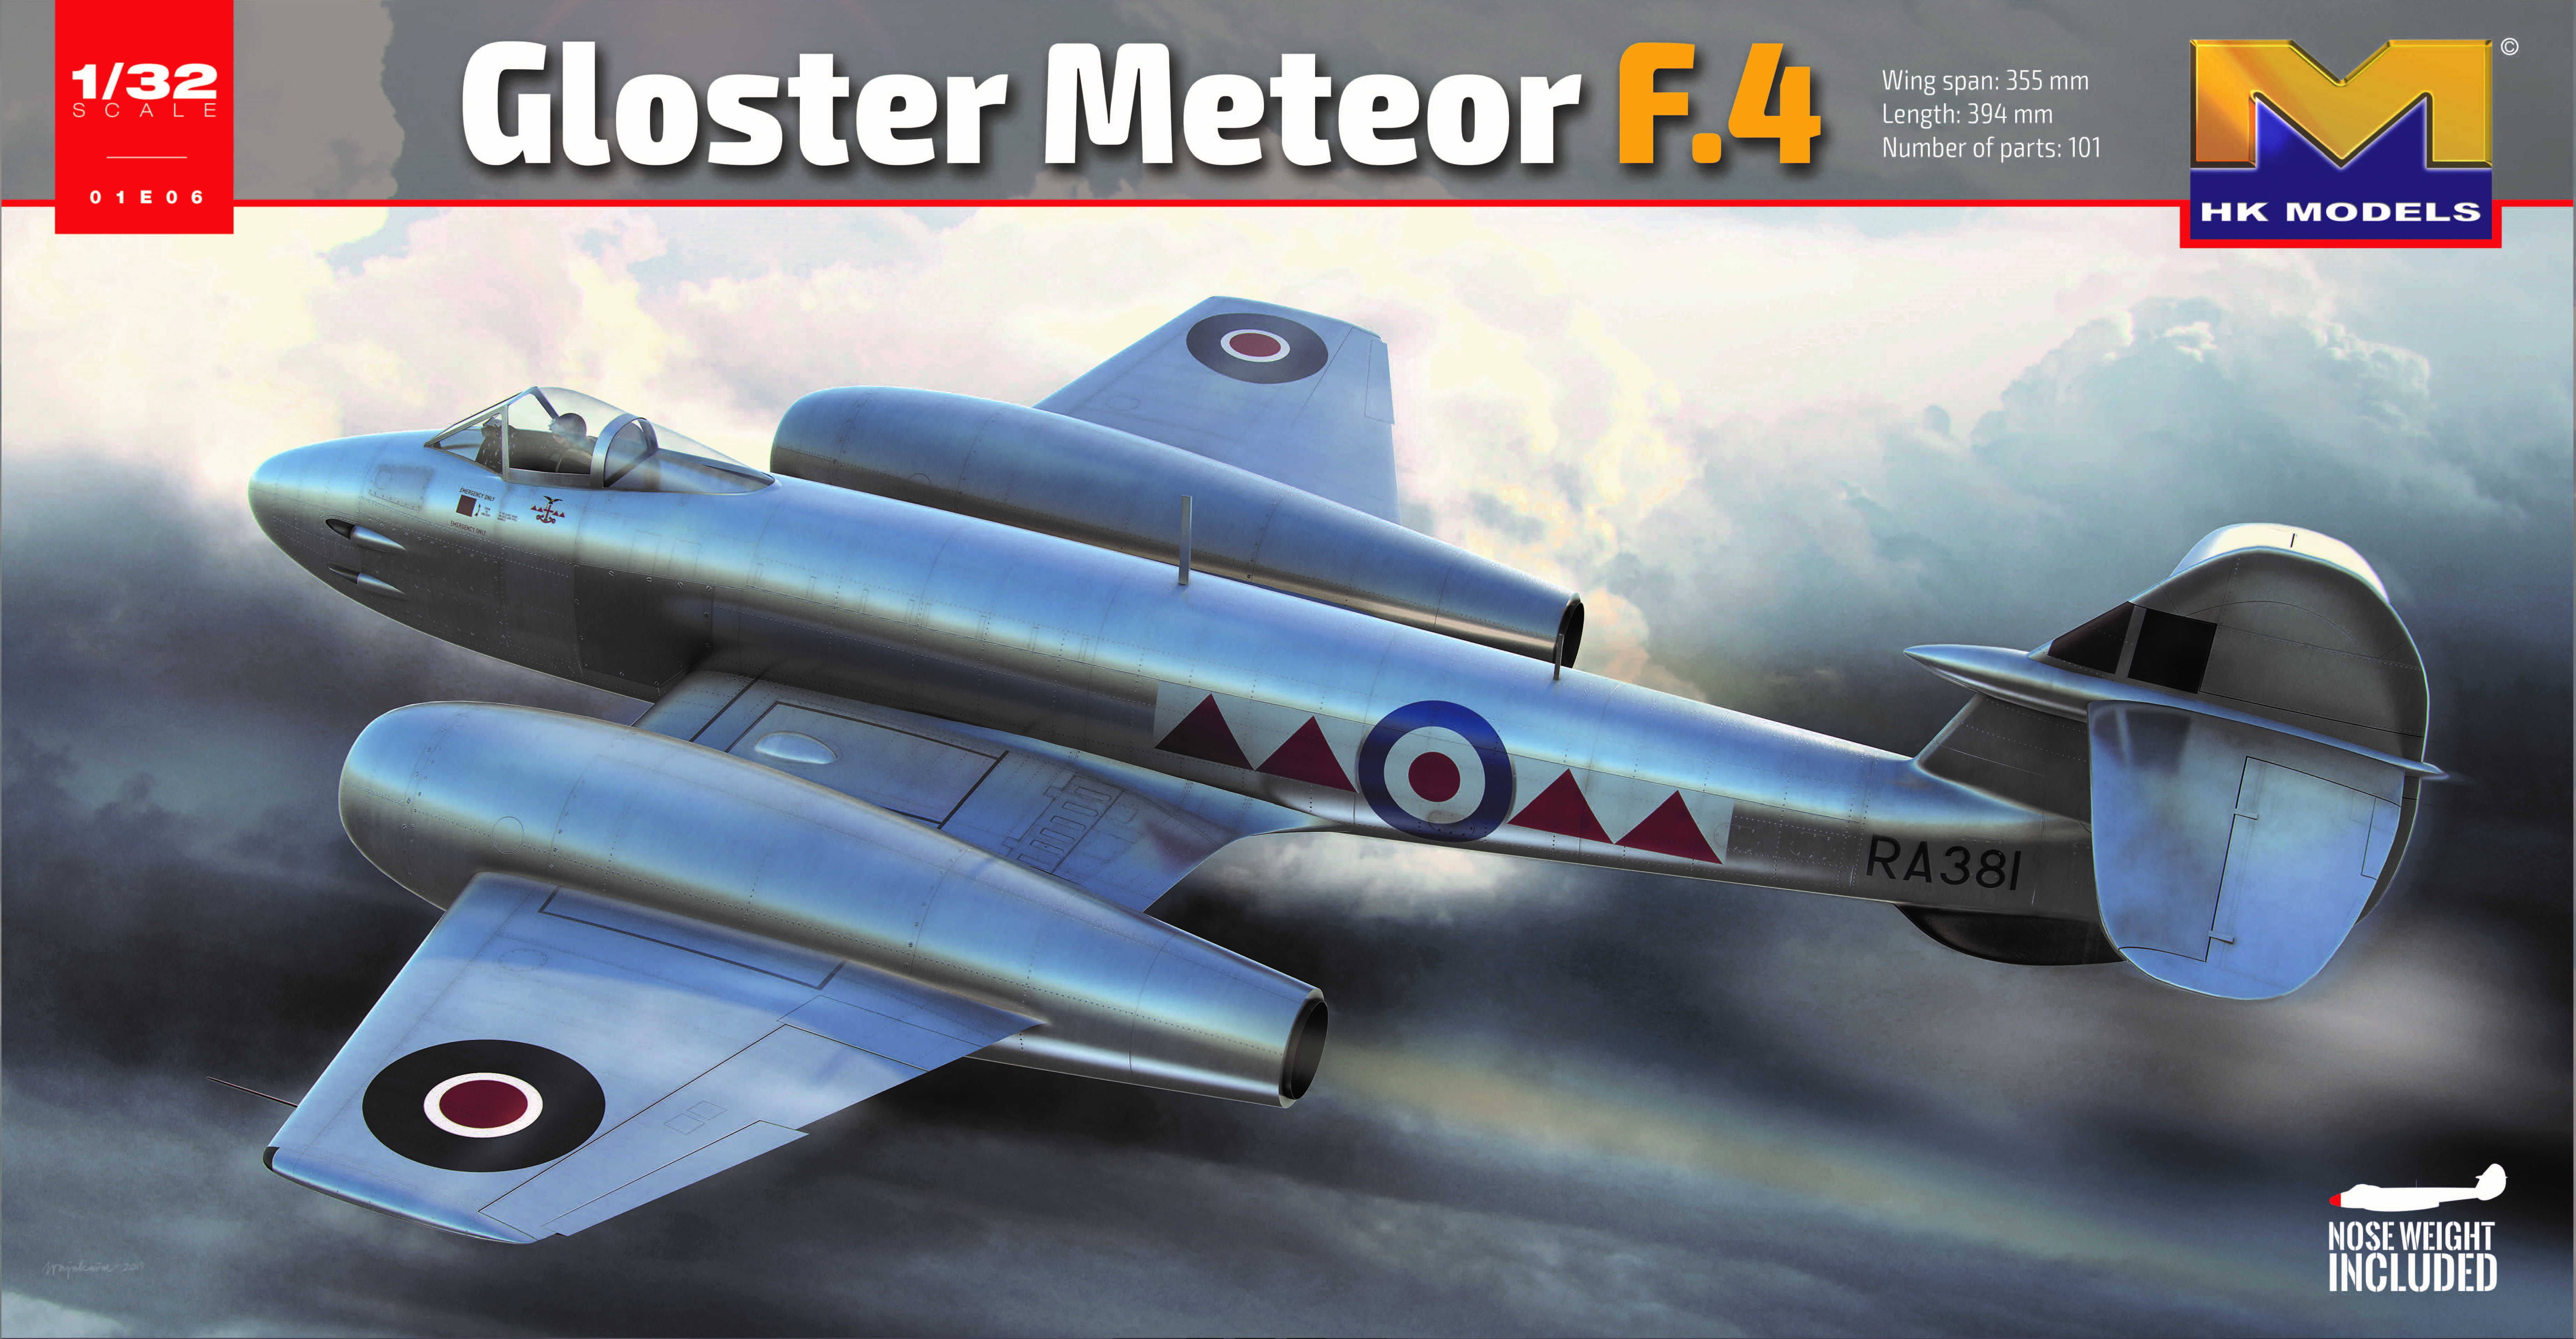 Hong Kong Models HKM01E06 Gloster Meteor F4 1/32 